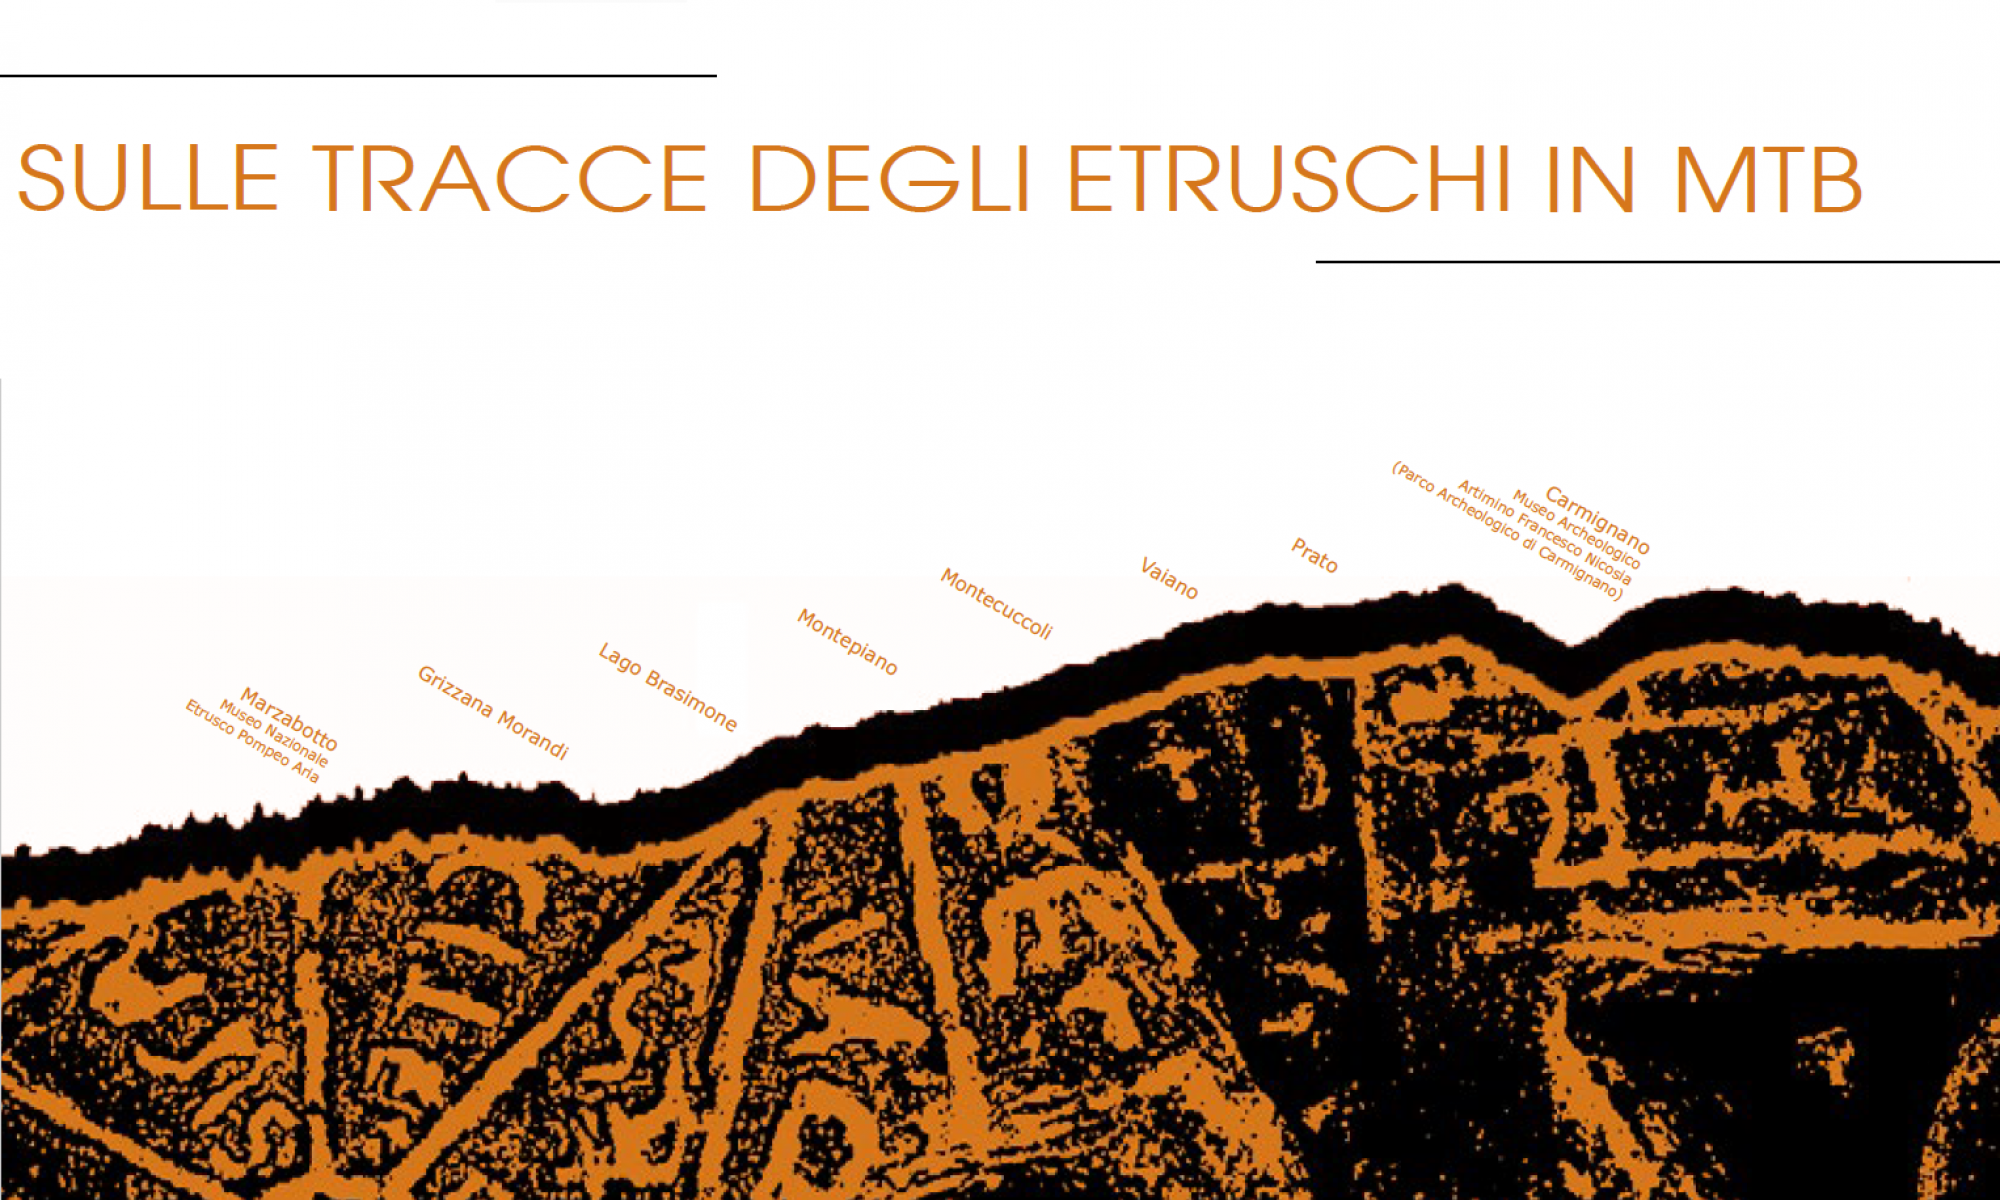 Via degli Etruschi